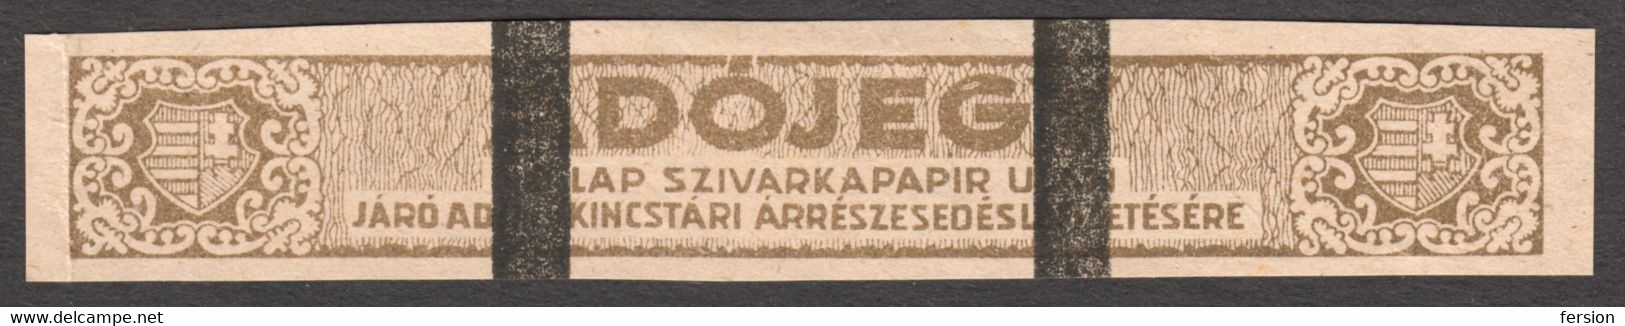 1945 1947 Hungary - Cigarette Paper Seal Stamp / Tobacco - Fiscal Revenue Tax SEAL Stripe - OVERPRINT - Fiscaux